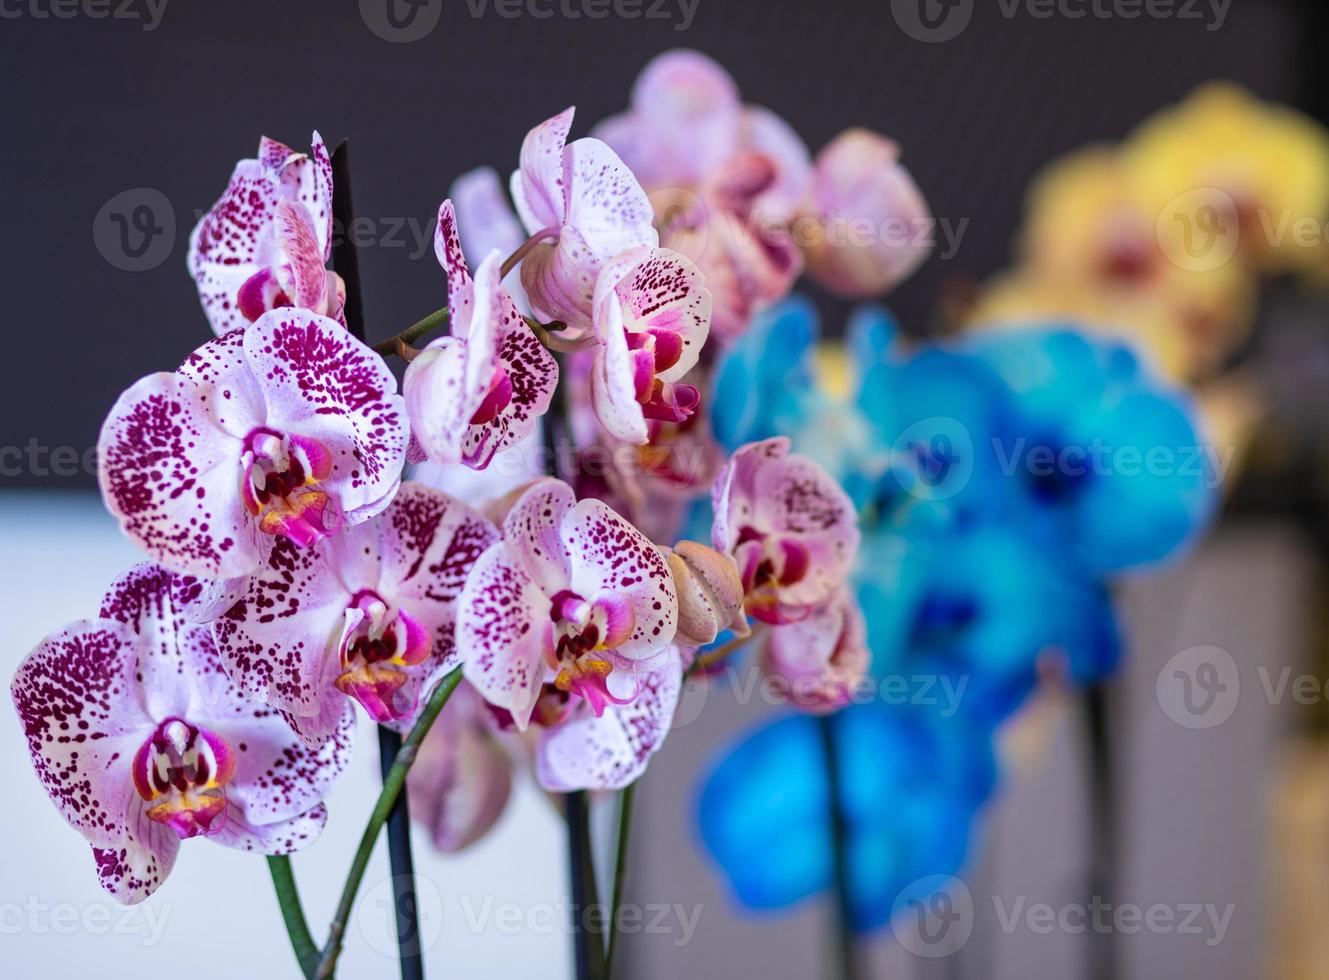 färgglada mal orkidéer phalaenopsis i kruka målade orkidé på nära håll foto